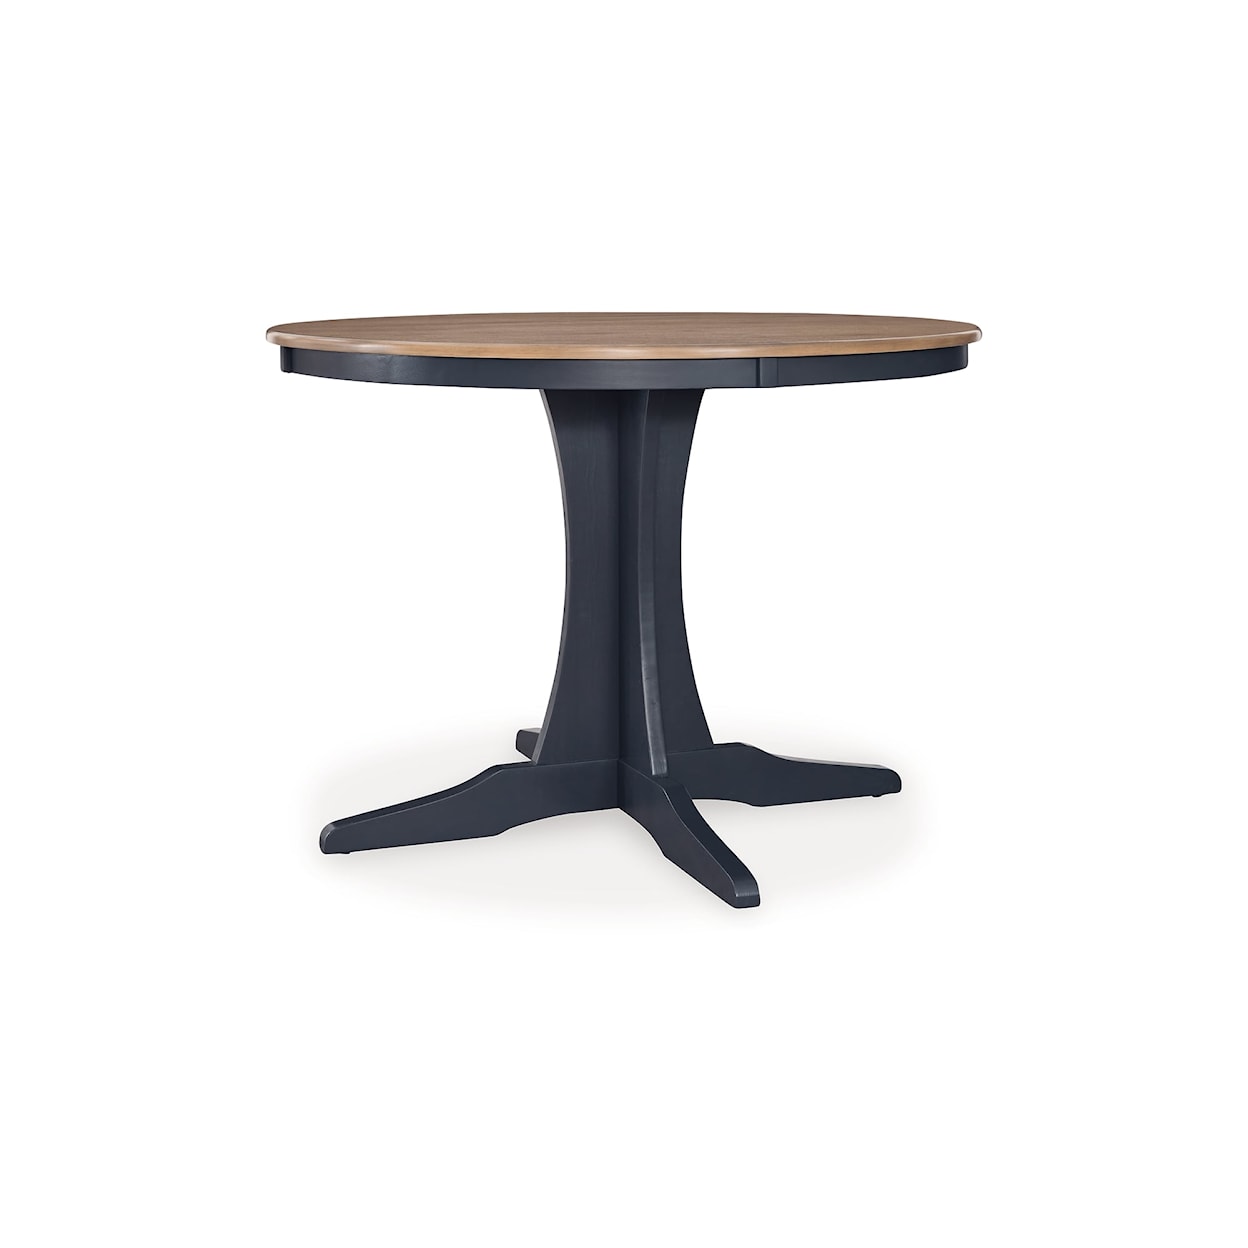 Ashley Furniture Signature Design Landocken Round Dining Room Table